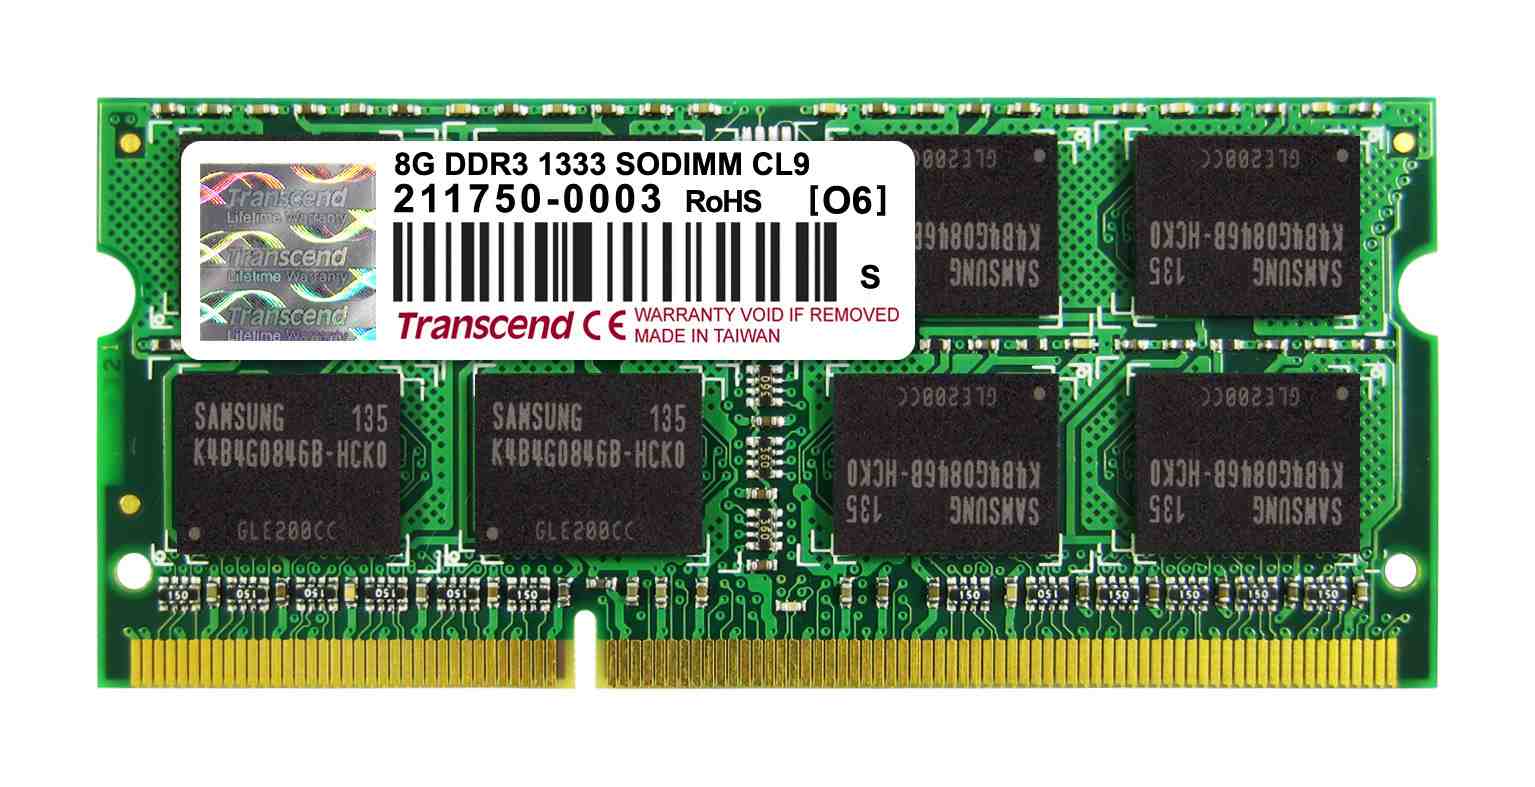 SODIMM DDR3 8GB 1333MHz TRANSCEND 2Rx8 CL90 